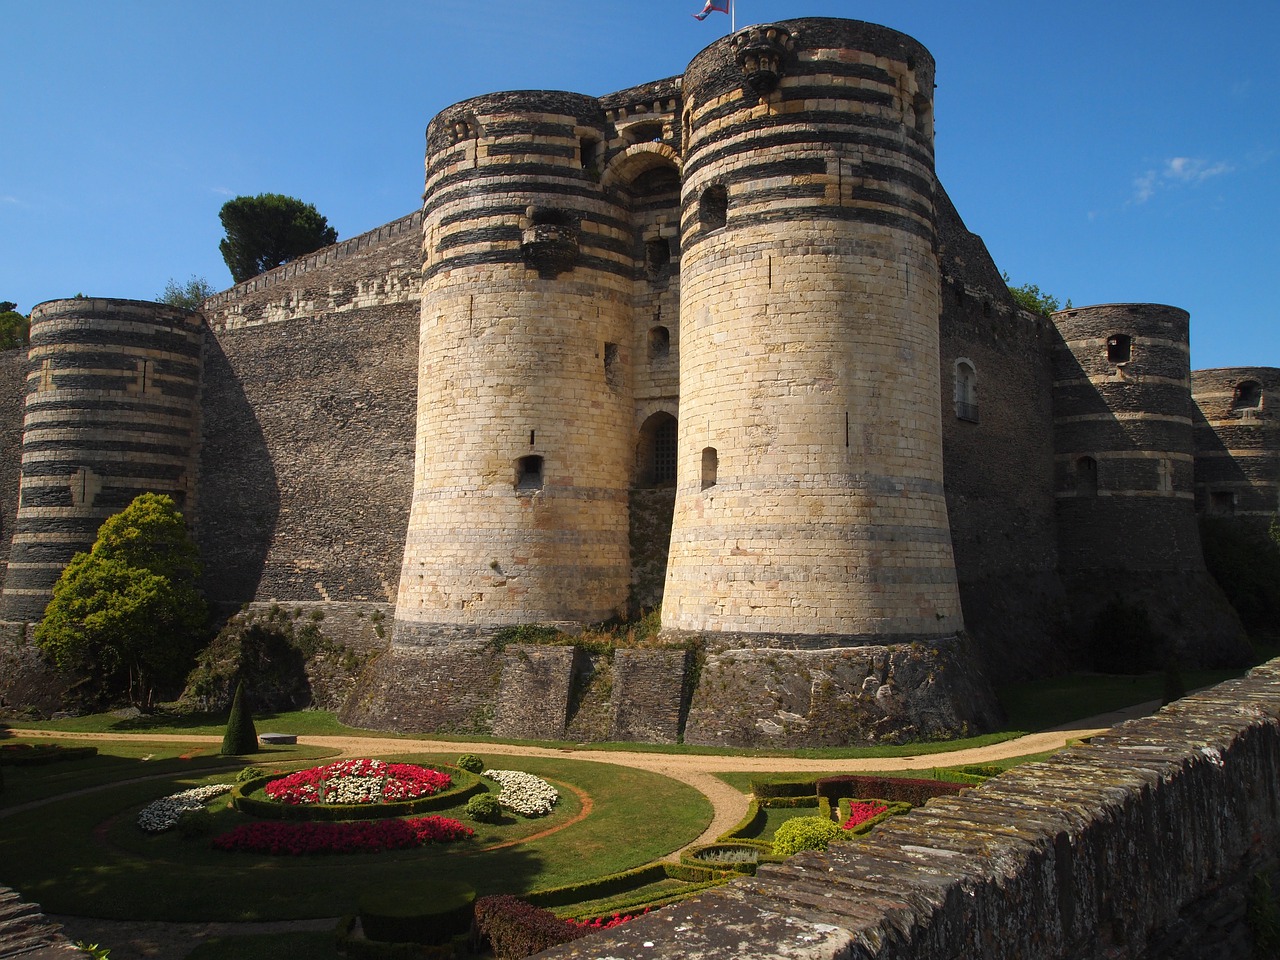 Chateau d’Angers